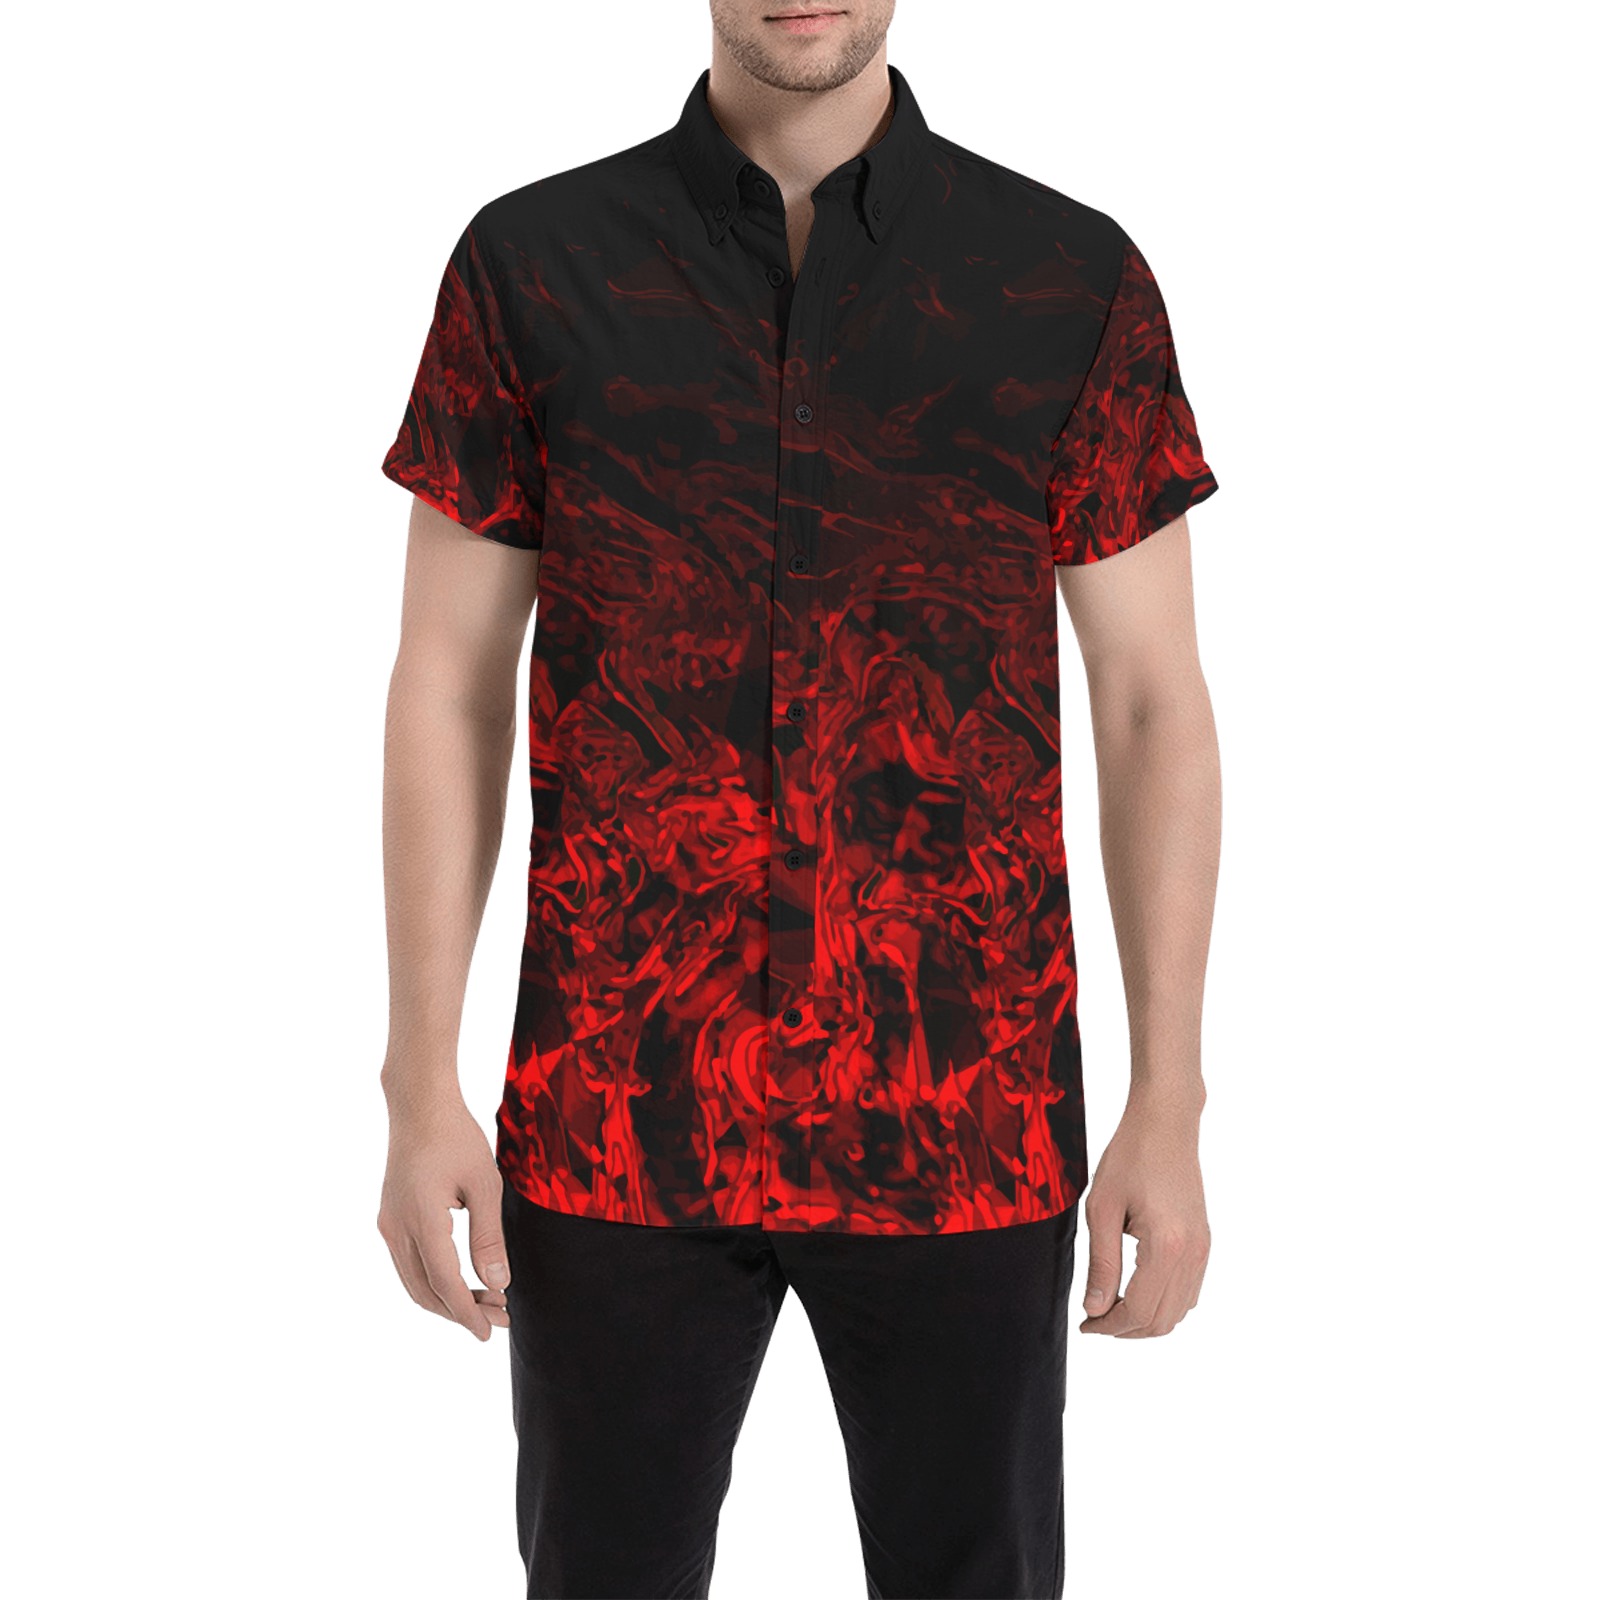 Red Nite - black and red geometric swirl gradient Men's All Over Print Short Sleeve Shirt (Model T53)